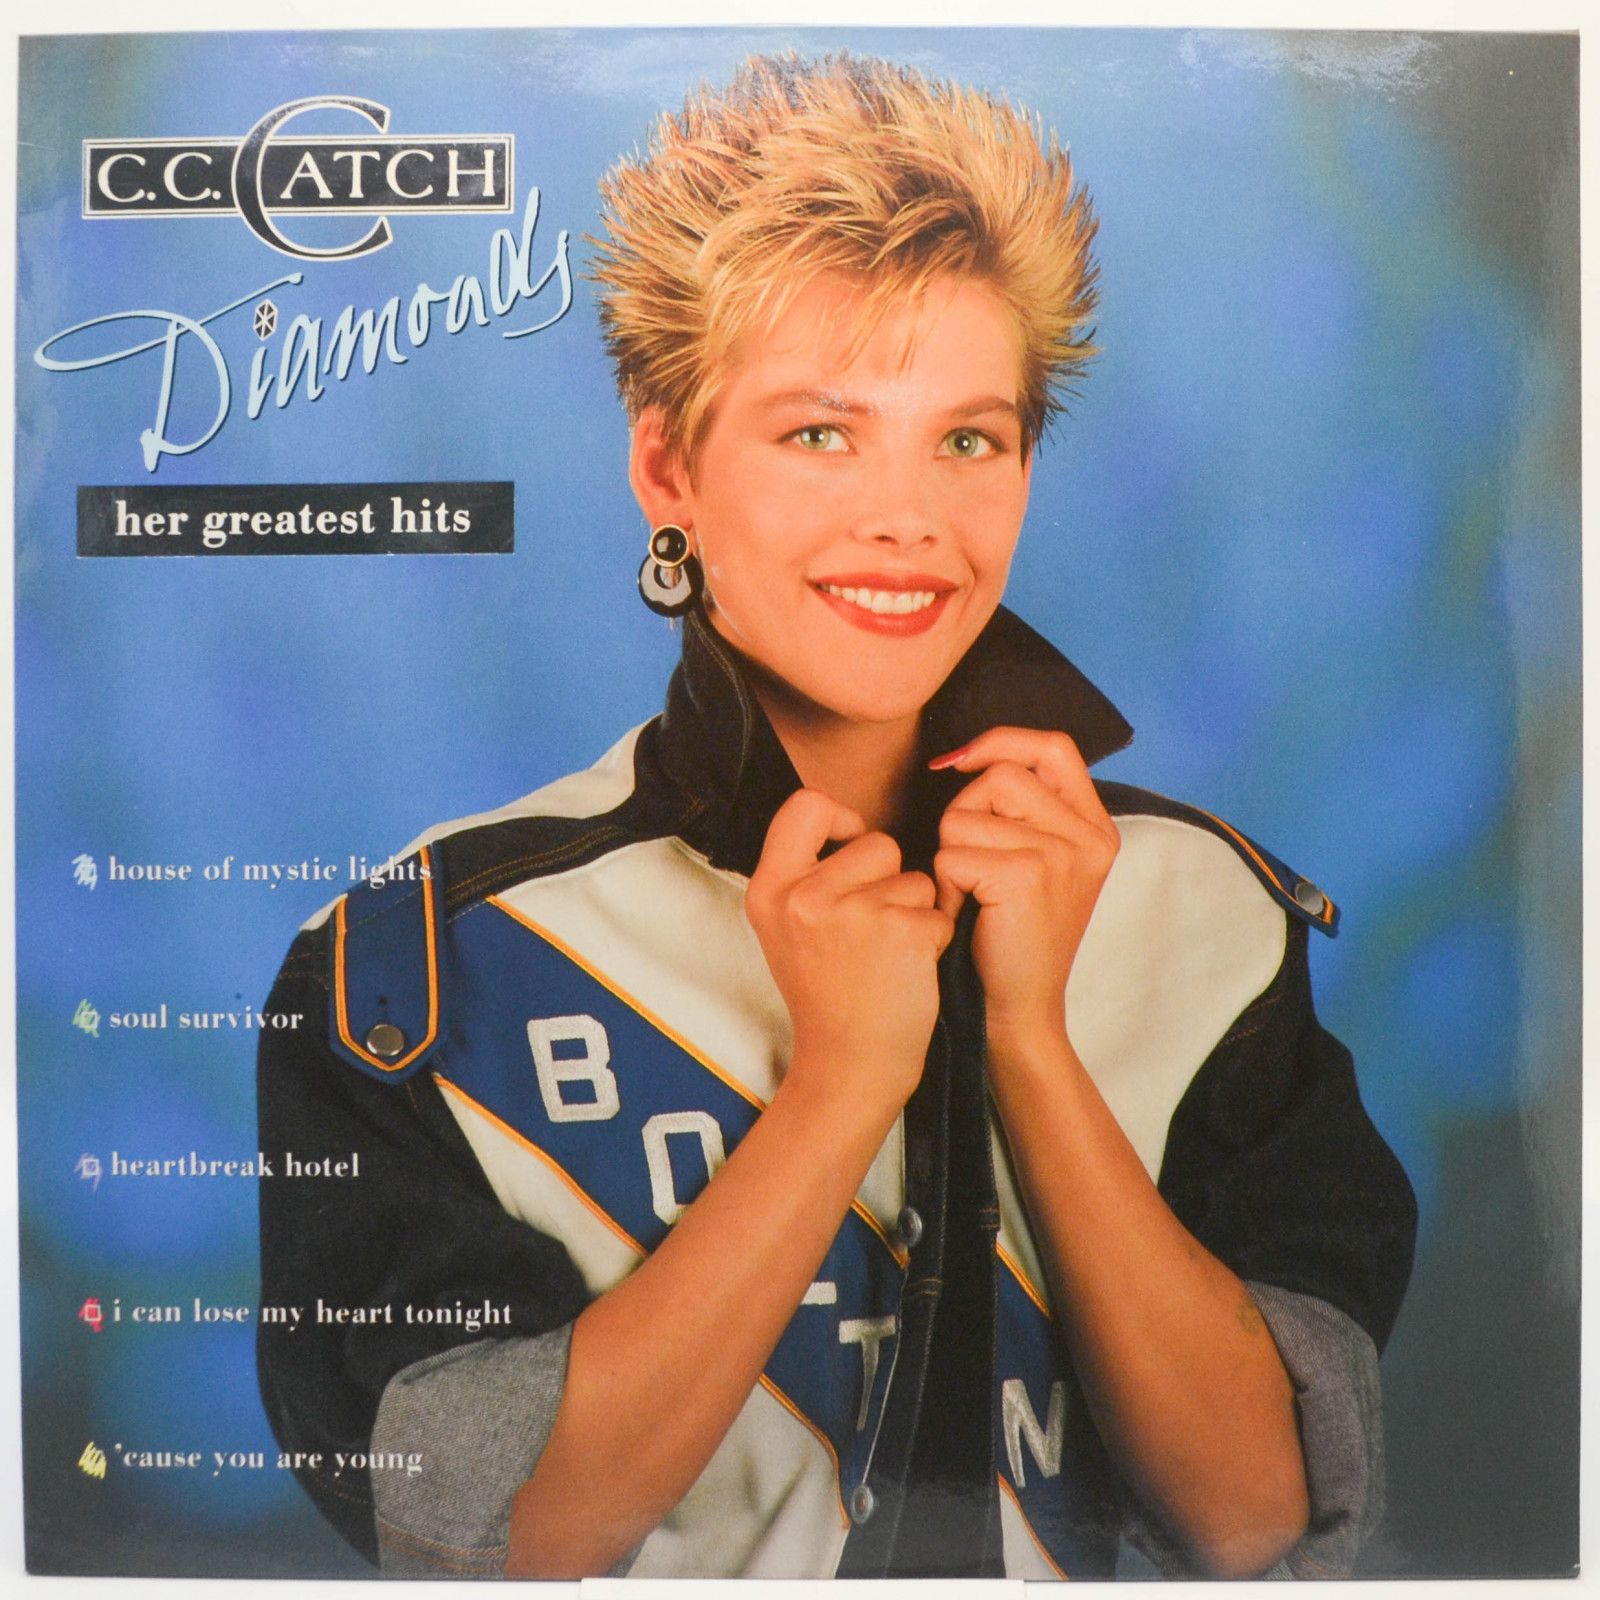 C.C. Catch — Diamonds - Her Greatest Hits, 1988